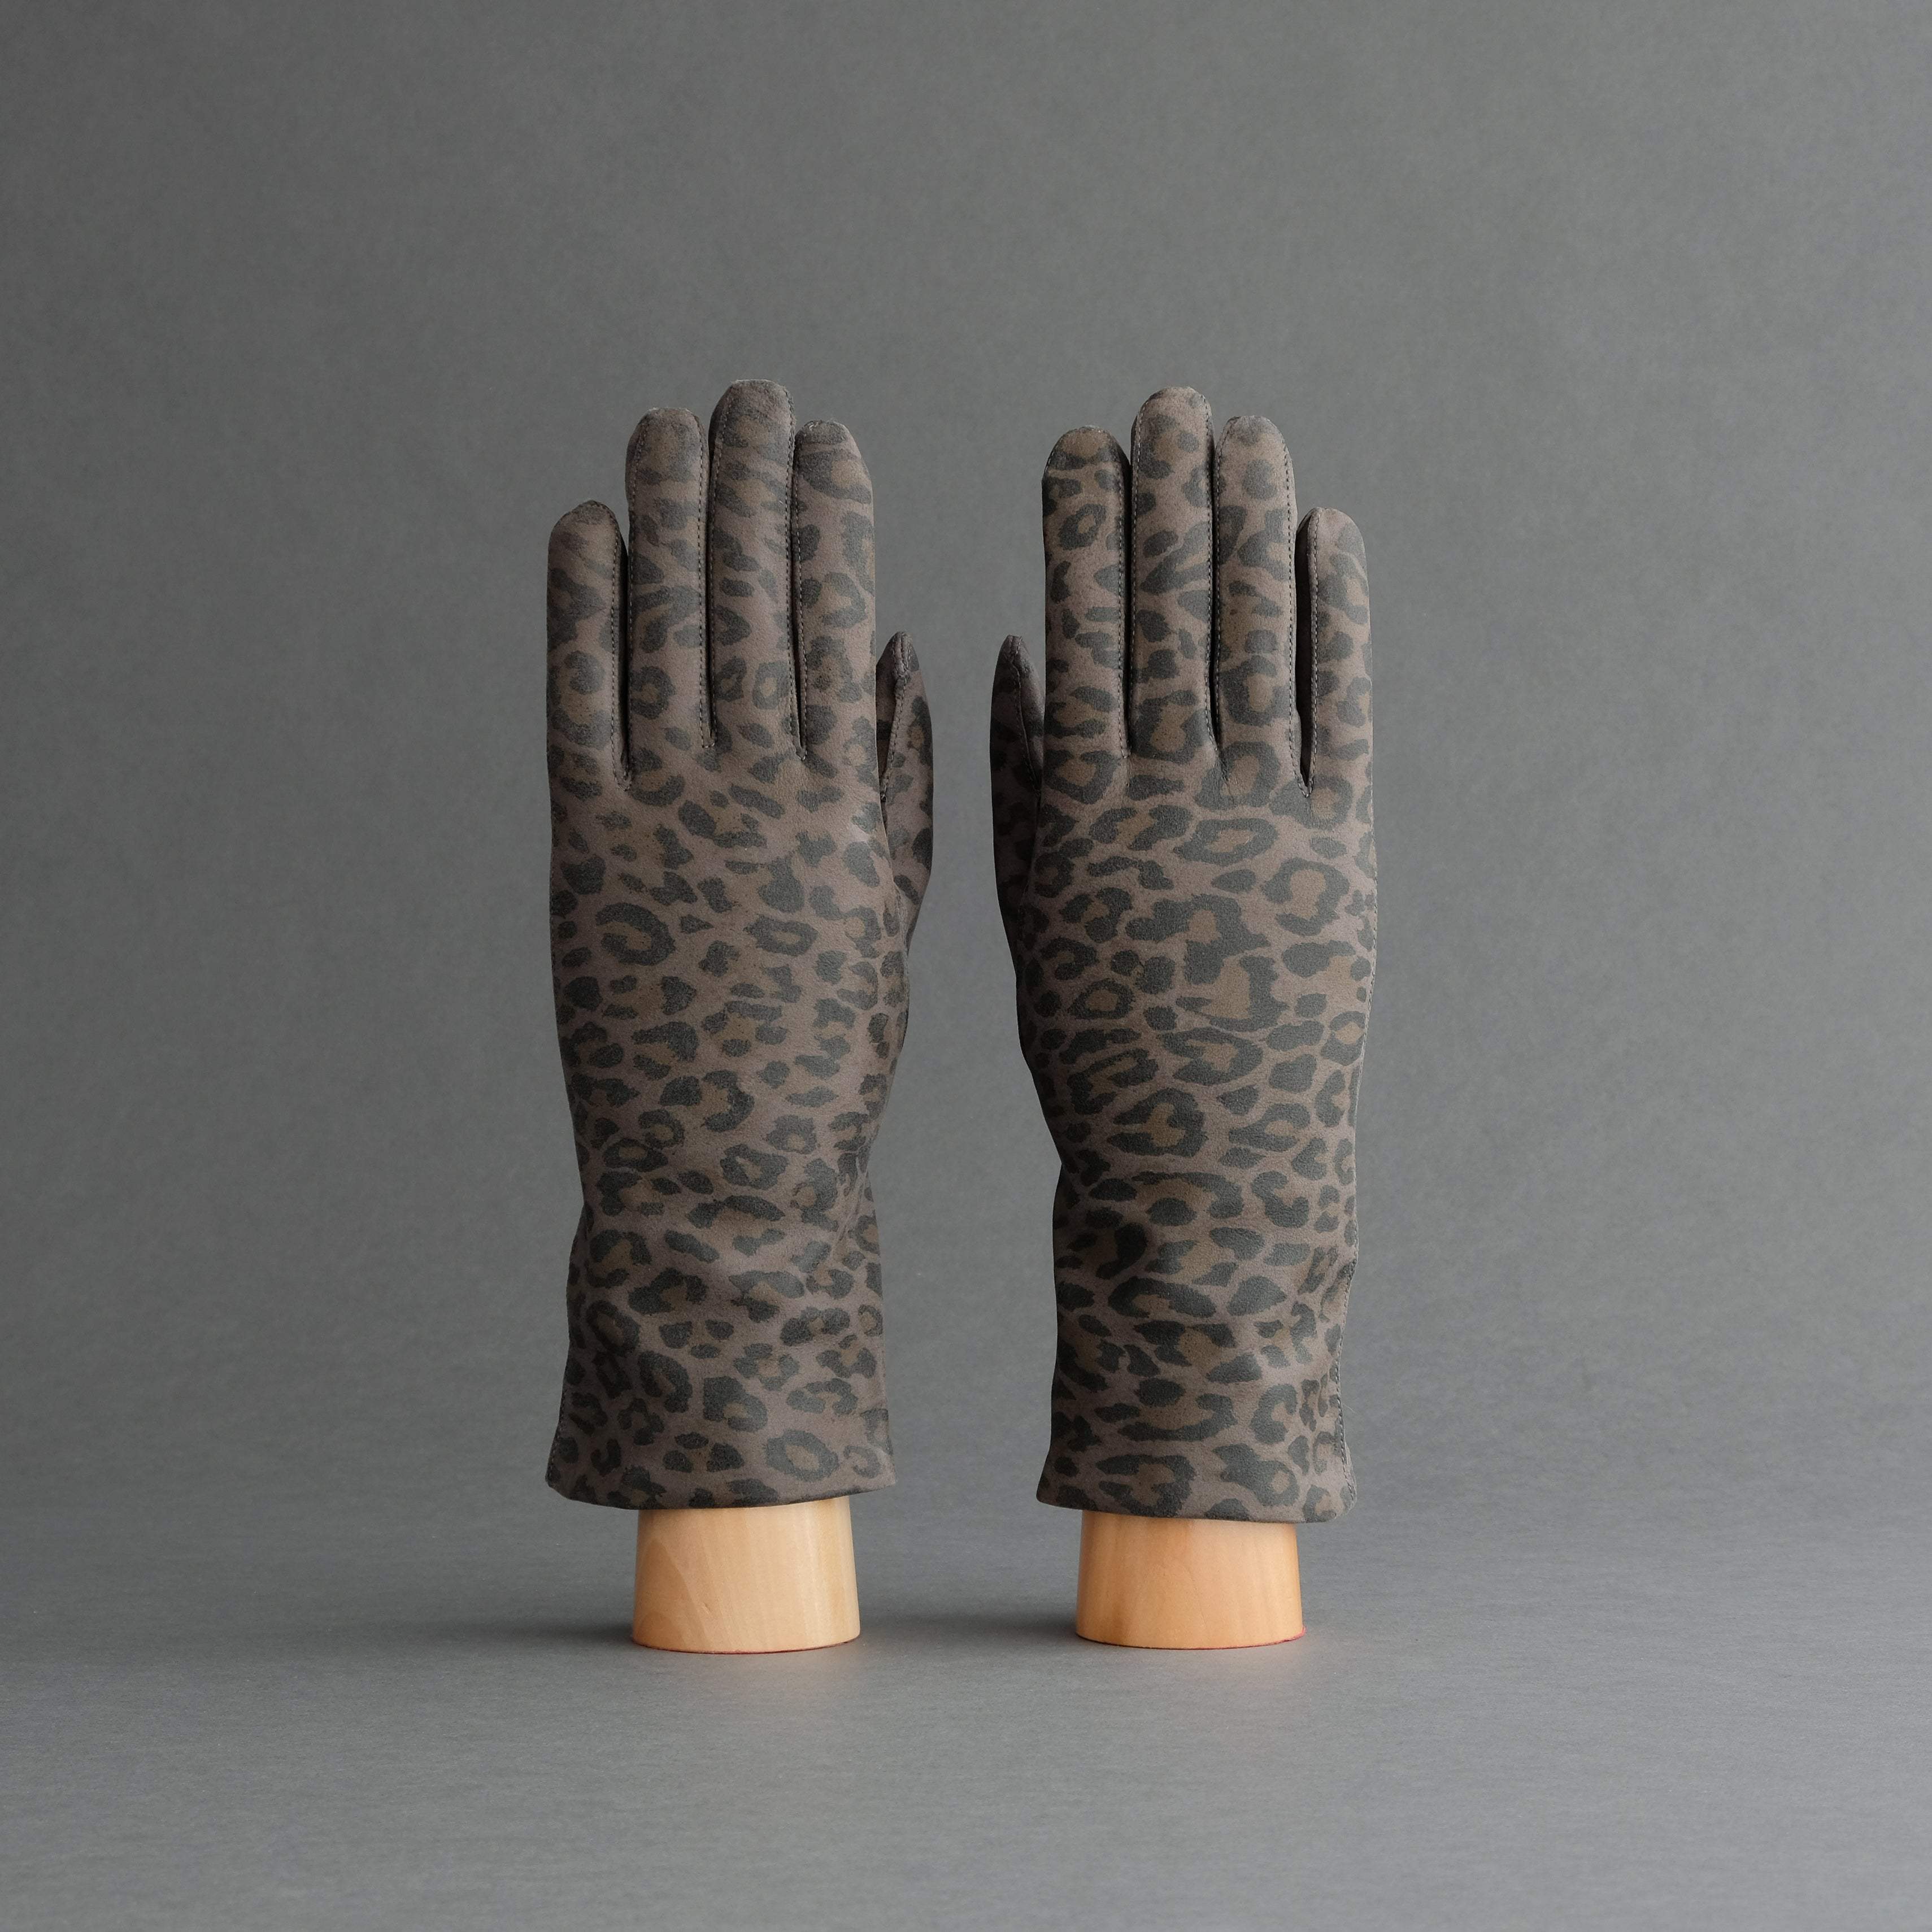 Wien Handmade In Gloves Handschuhe - Riemer – Schaf Haar Nappa Thomas Leopard aus Print Handschuhe Damen TR